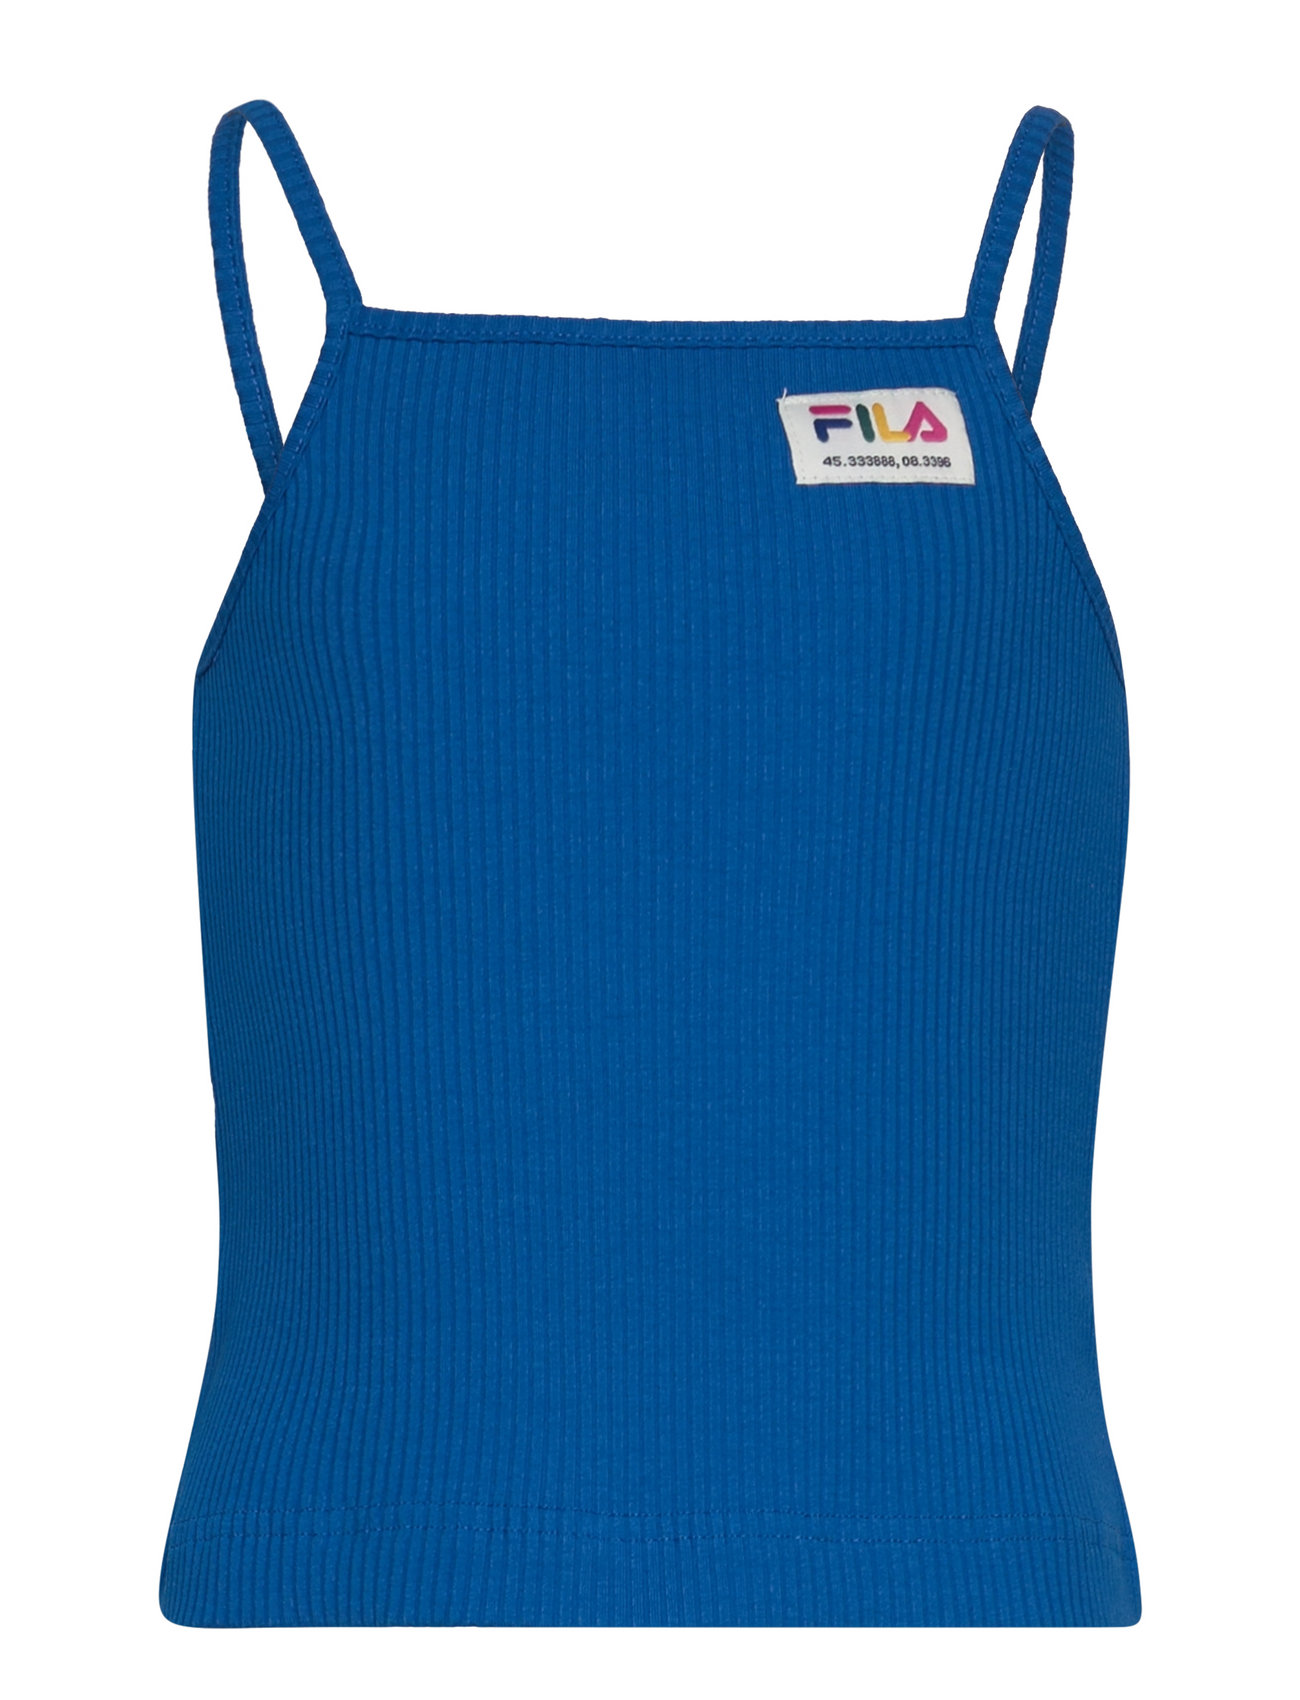 Tuelau Wide Top Sport T-shirts Sleeveless Blue FILA